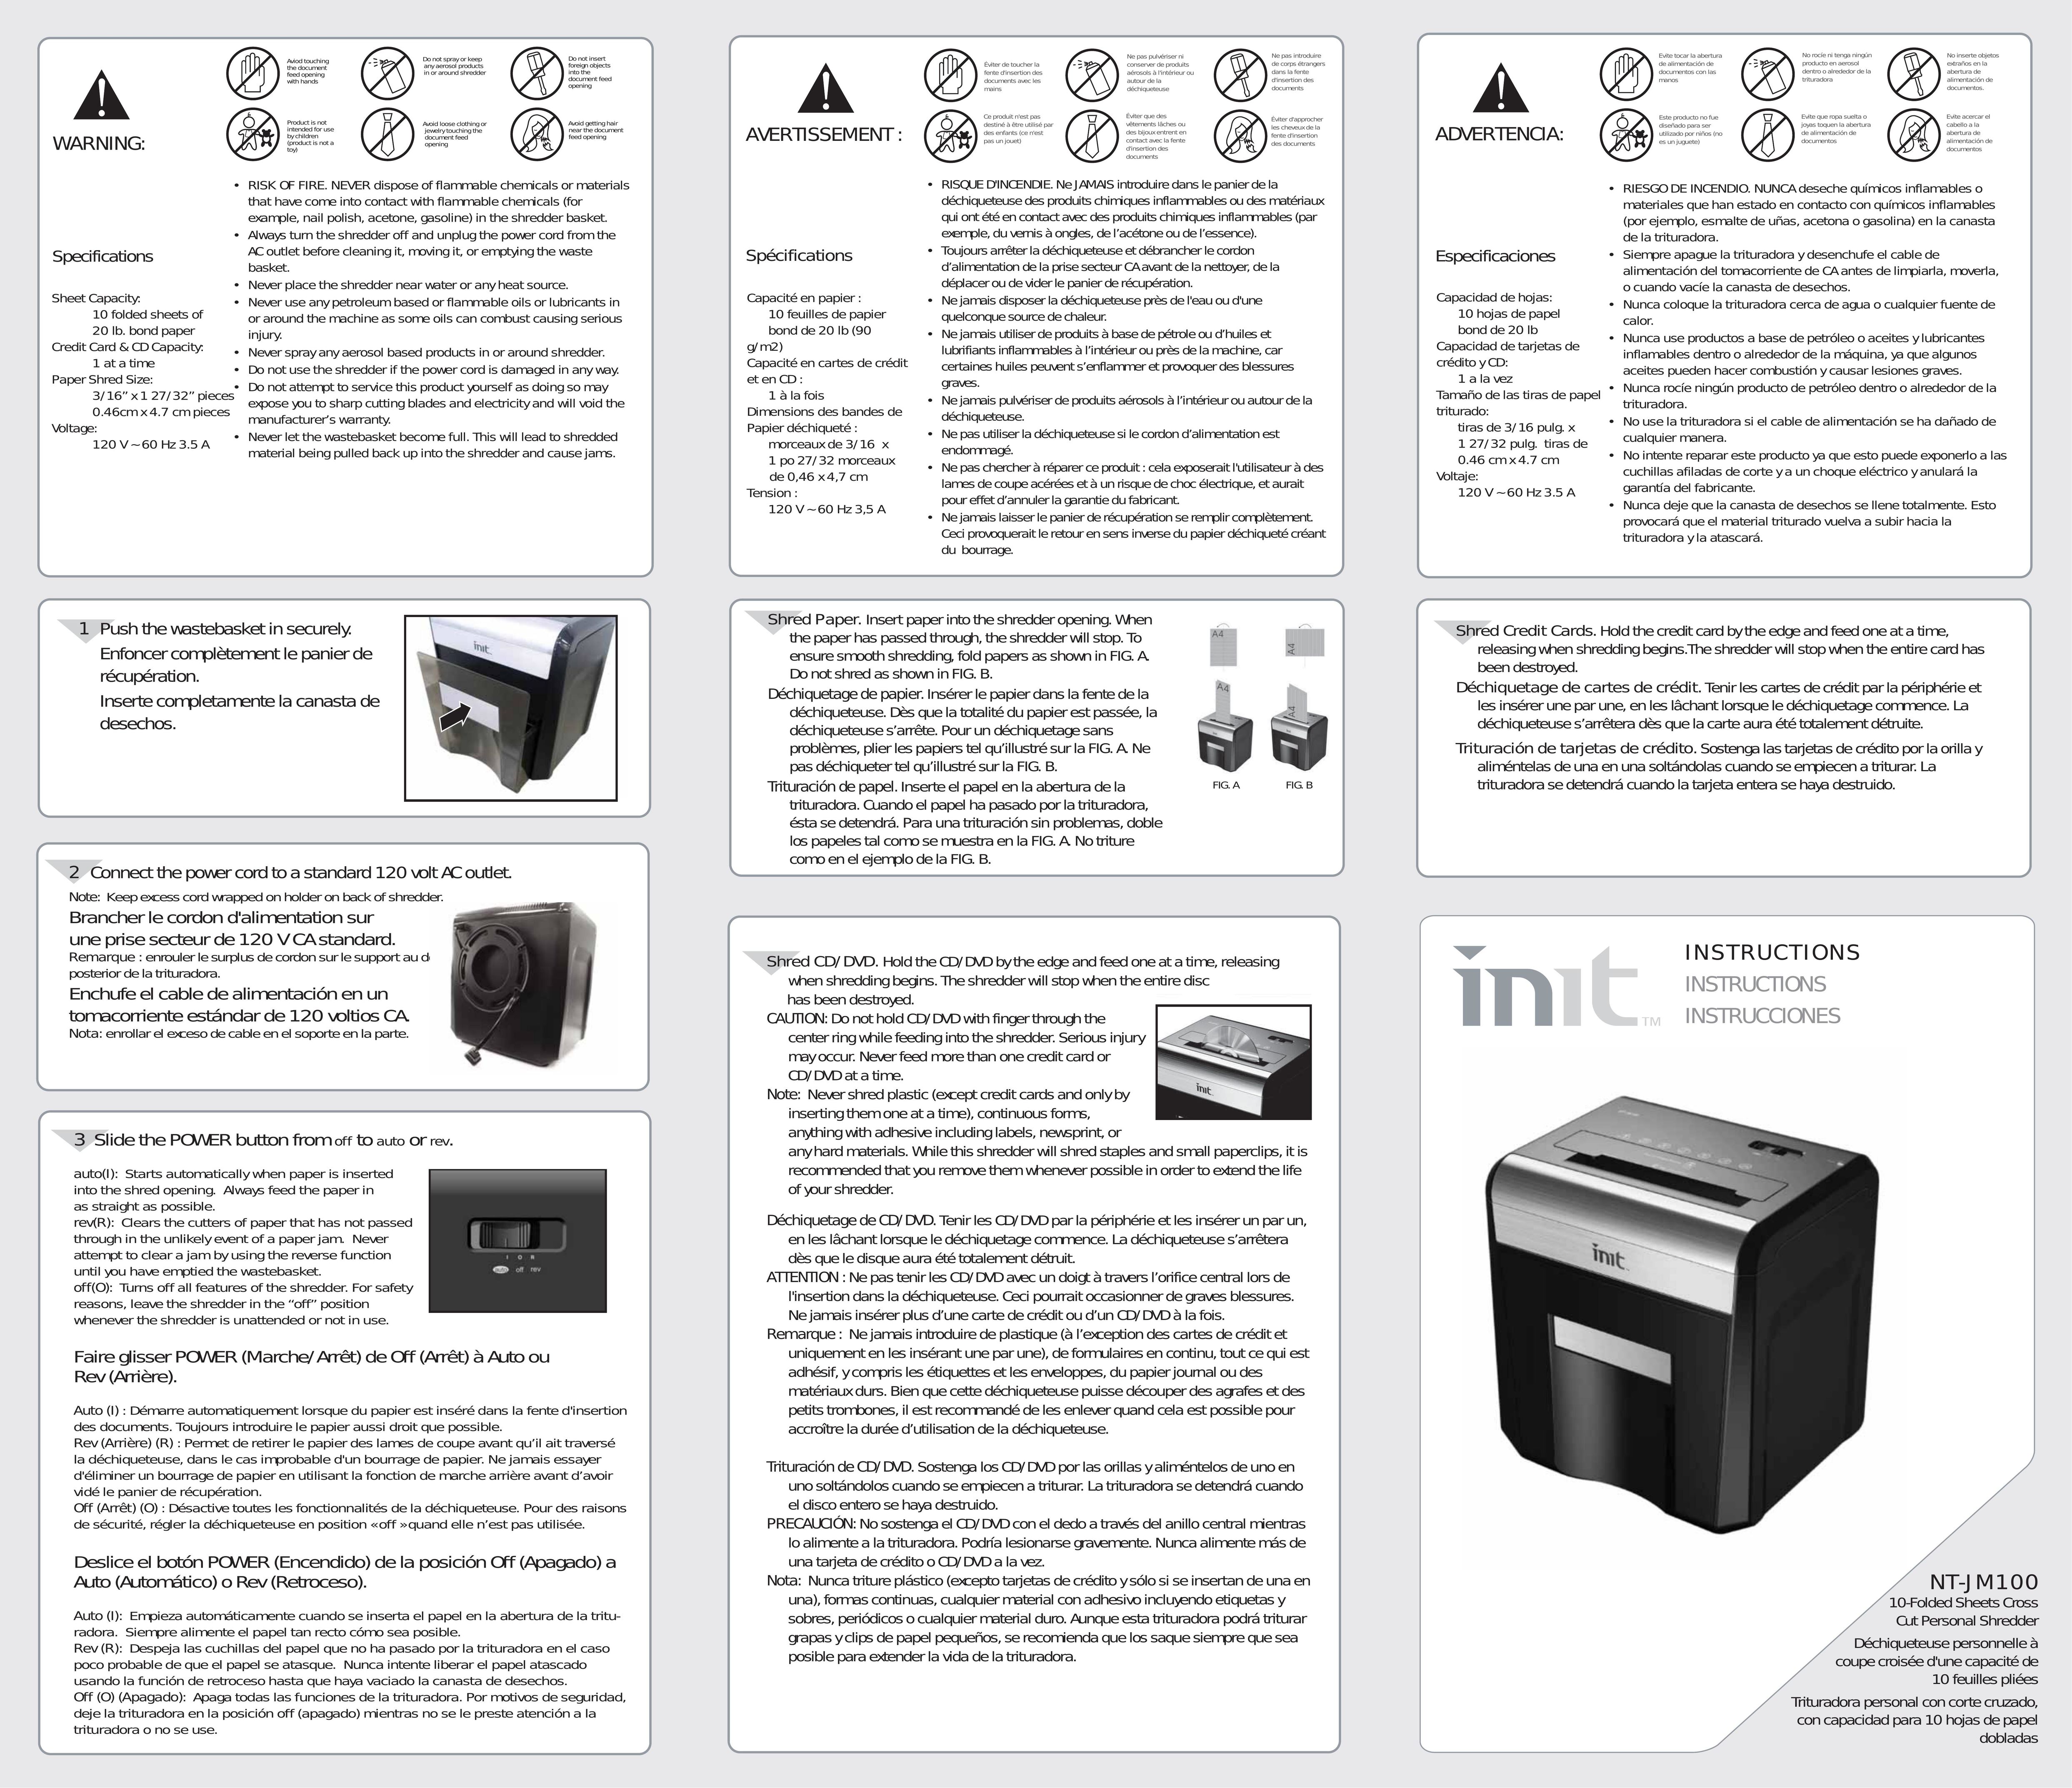 Init NT-JM100 Paper Shredder User Manual